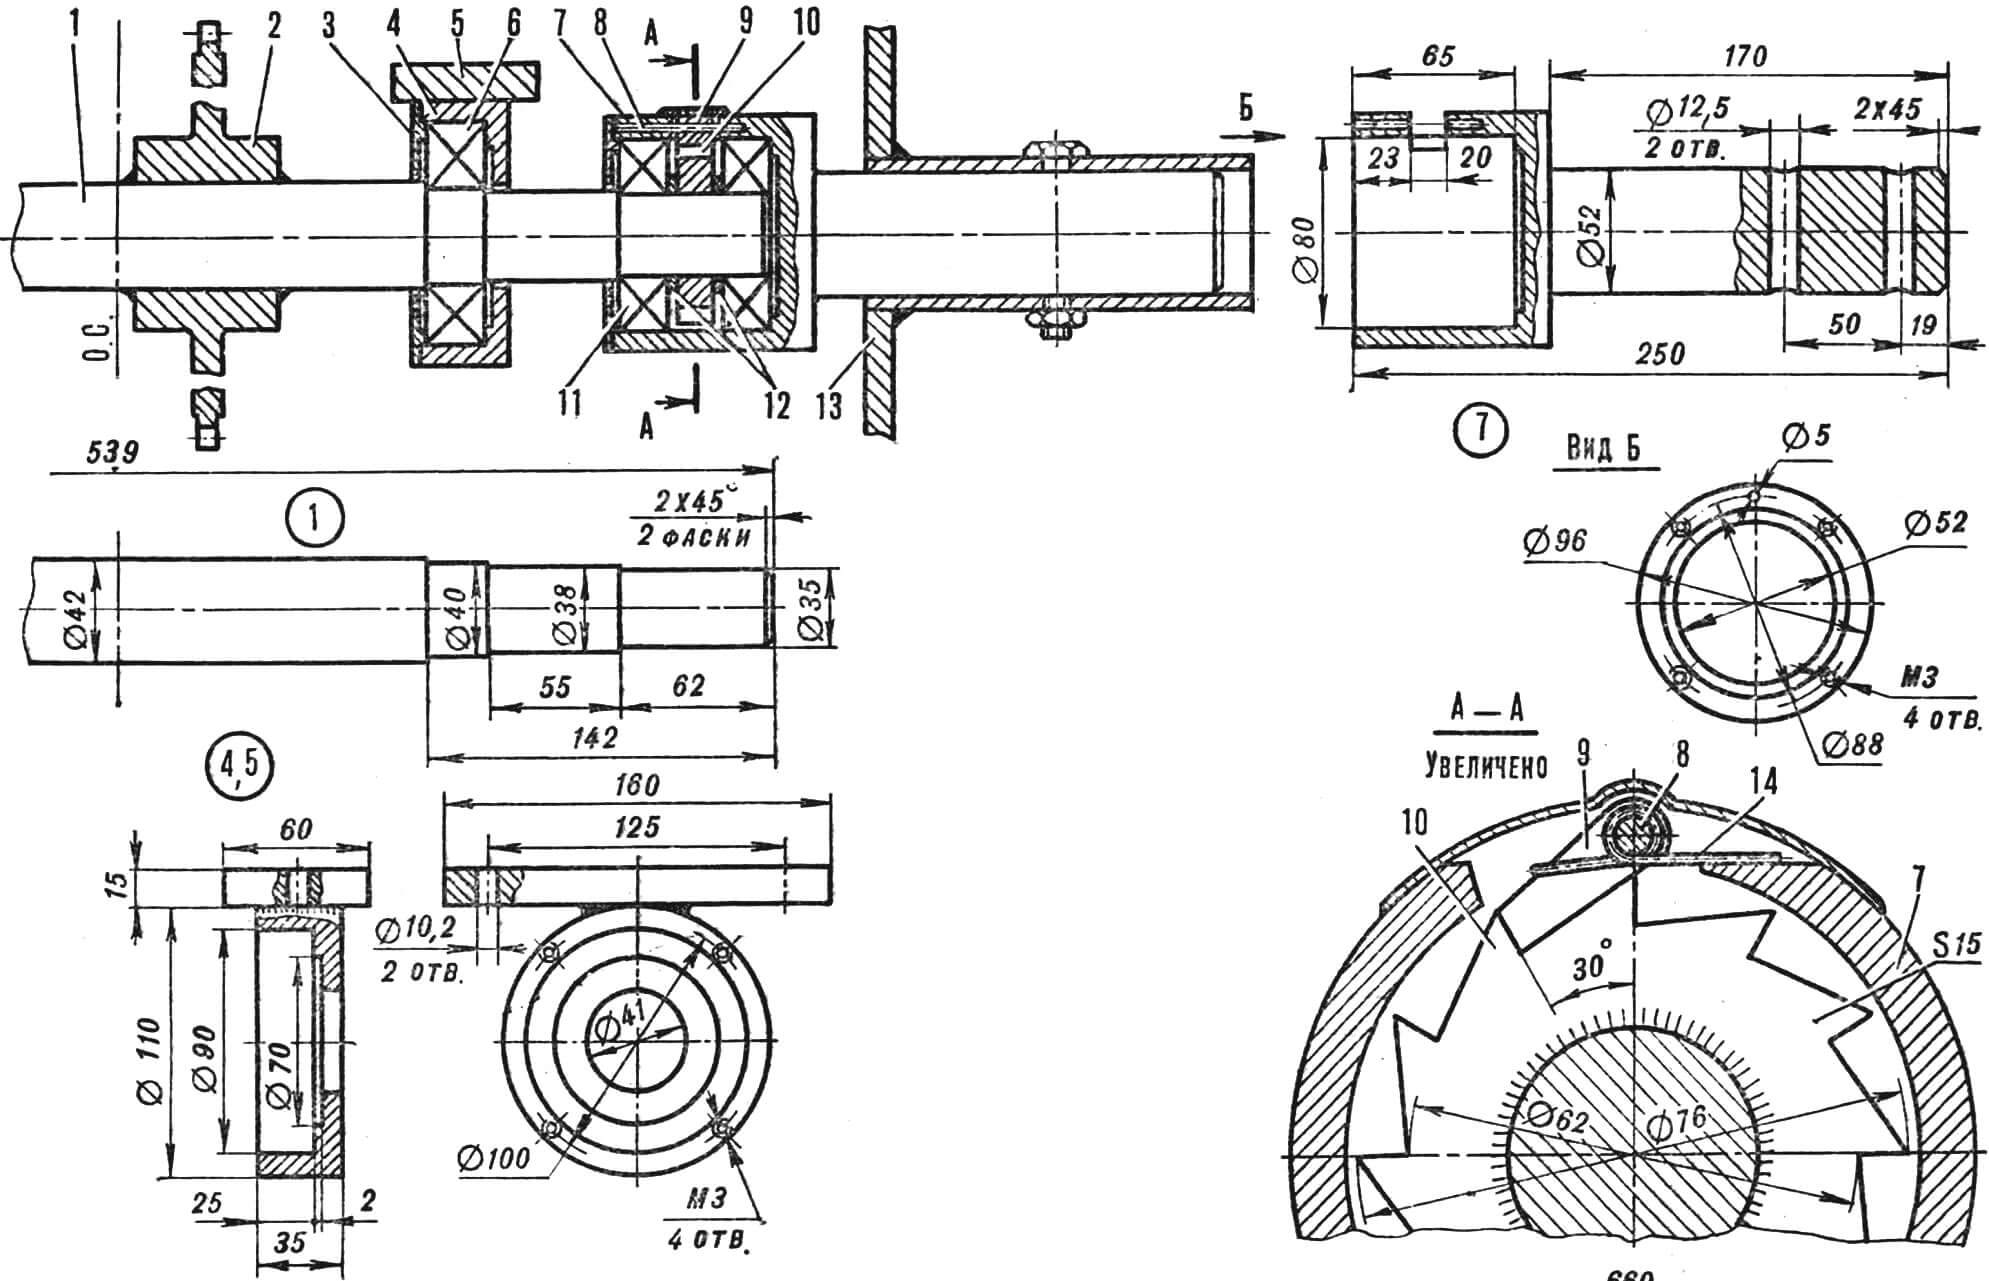 Fig. 3. Assembled axle shaft